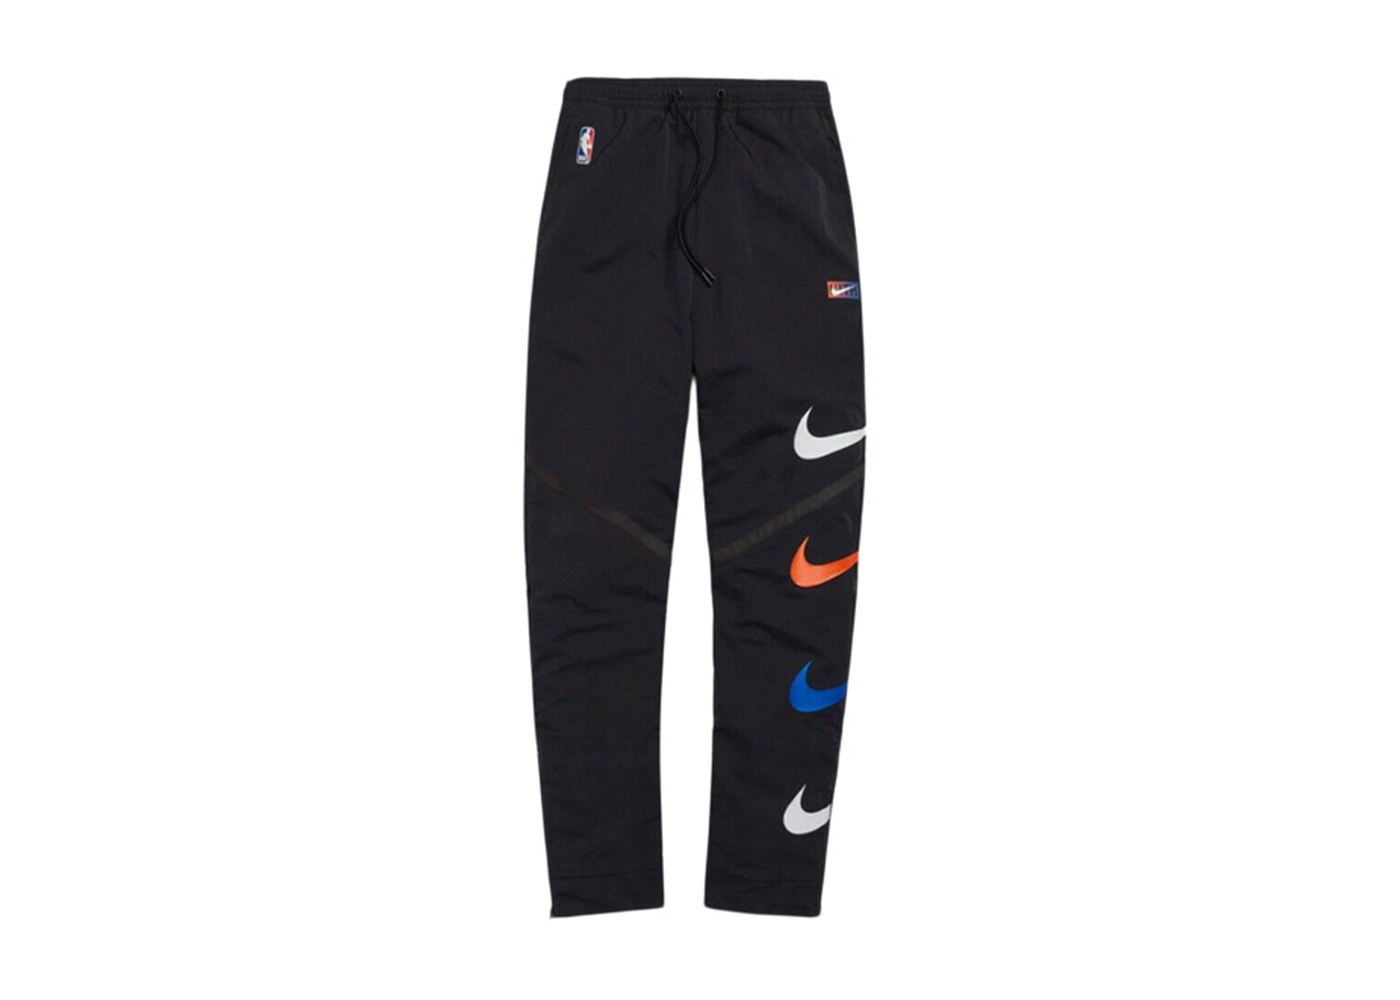 Kith Nike for New York Knicks Pants Black/Multi Men's - US